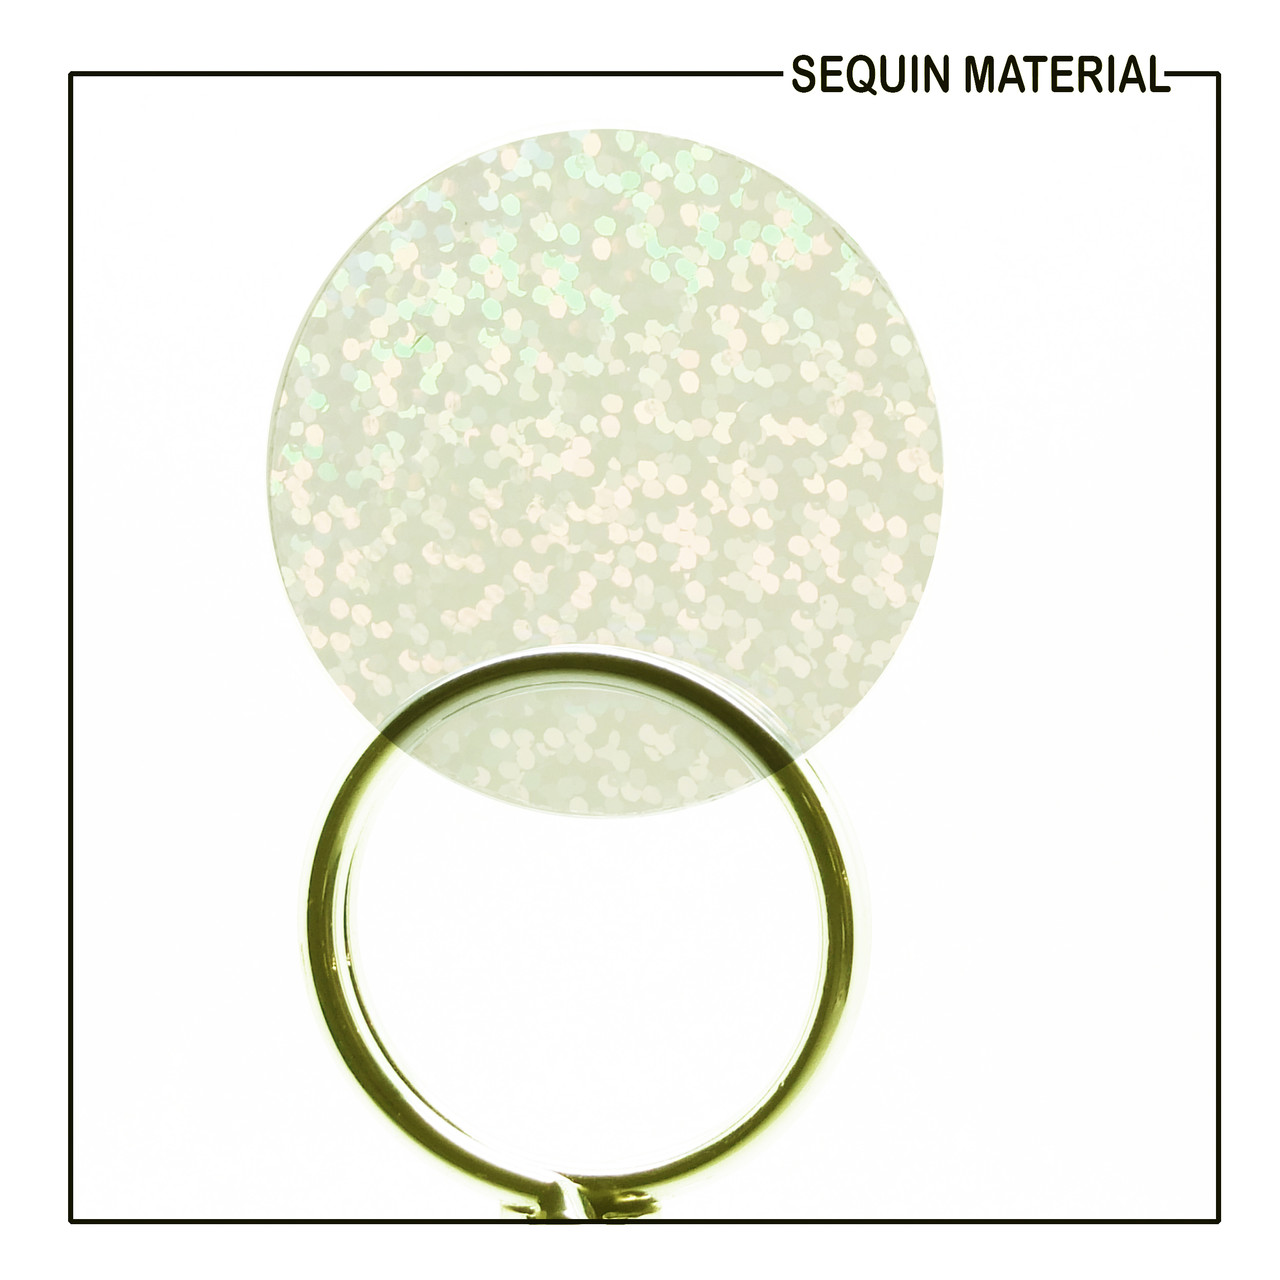 SequinsUSA Crystal White Hologram Glitter Sparkle Sequin Material RL955